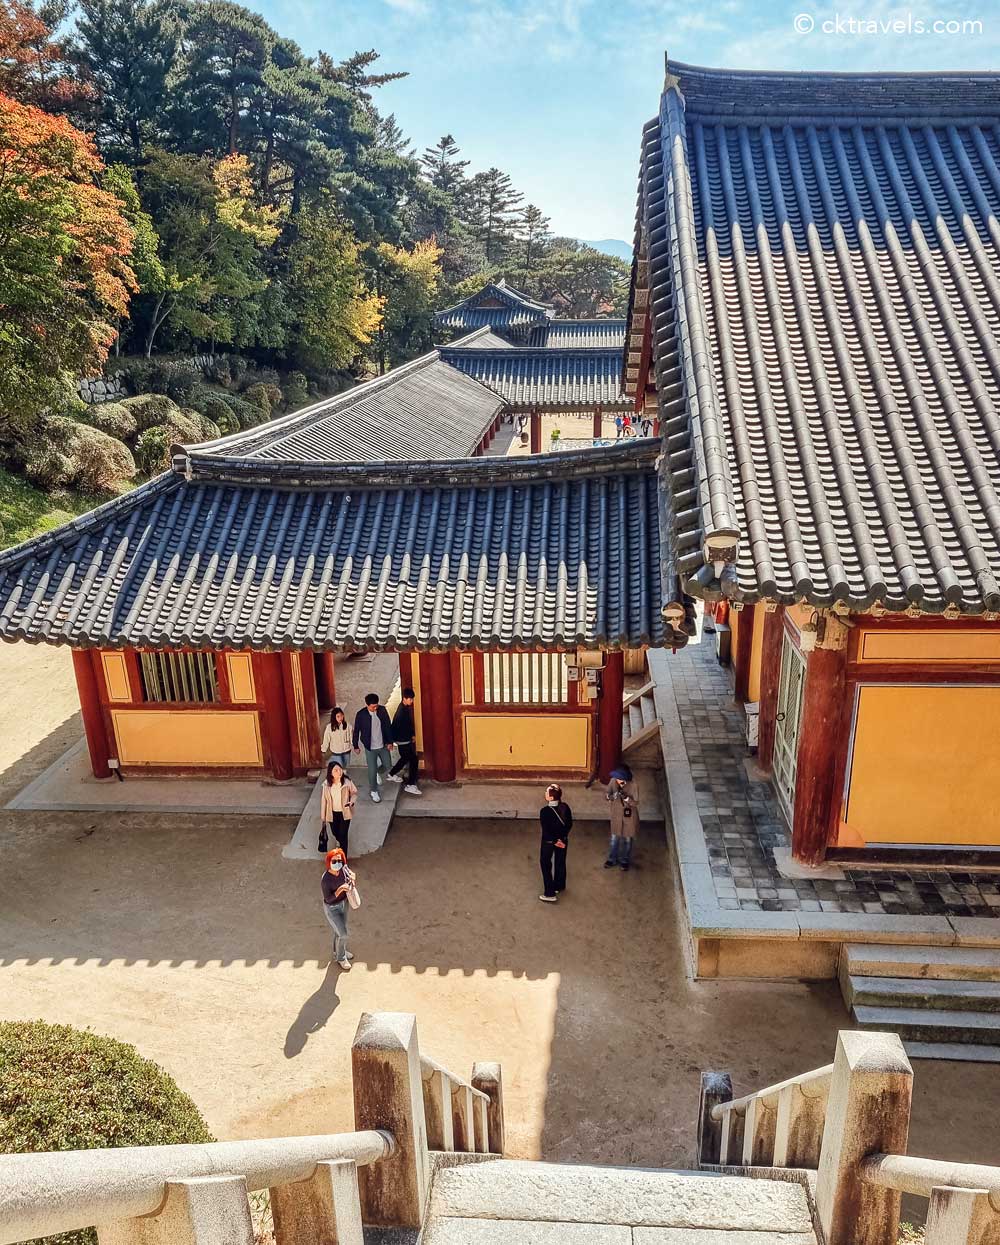 Museoljeon Hall Bulguksa Temple in Gyeongju, South Korea